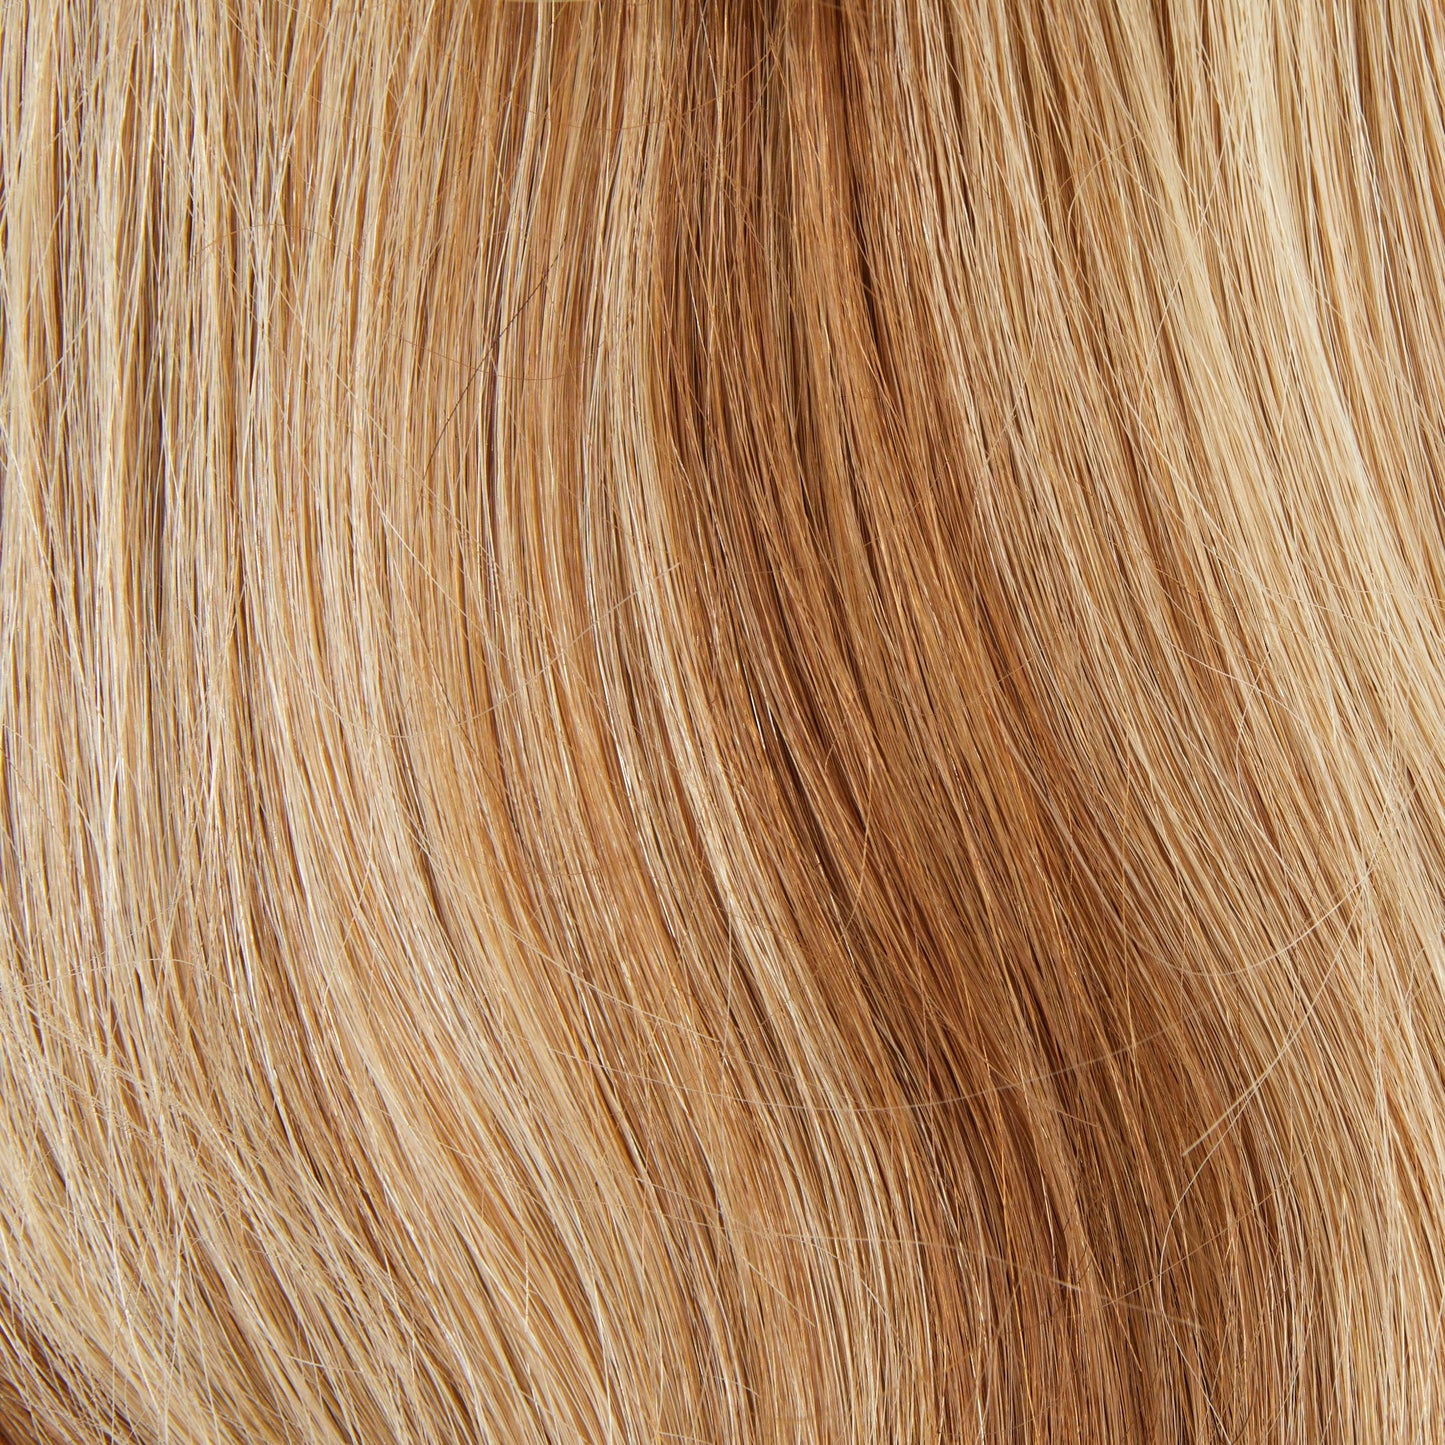 #6-613 Platinum Blond - Medium Brown MONO TOPPER